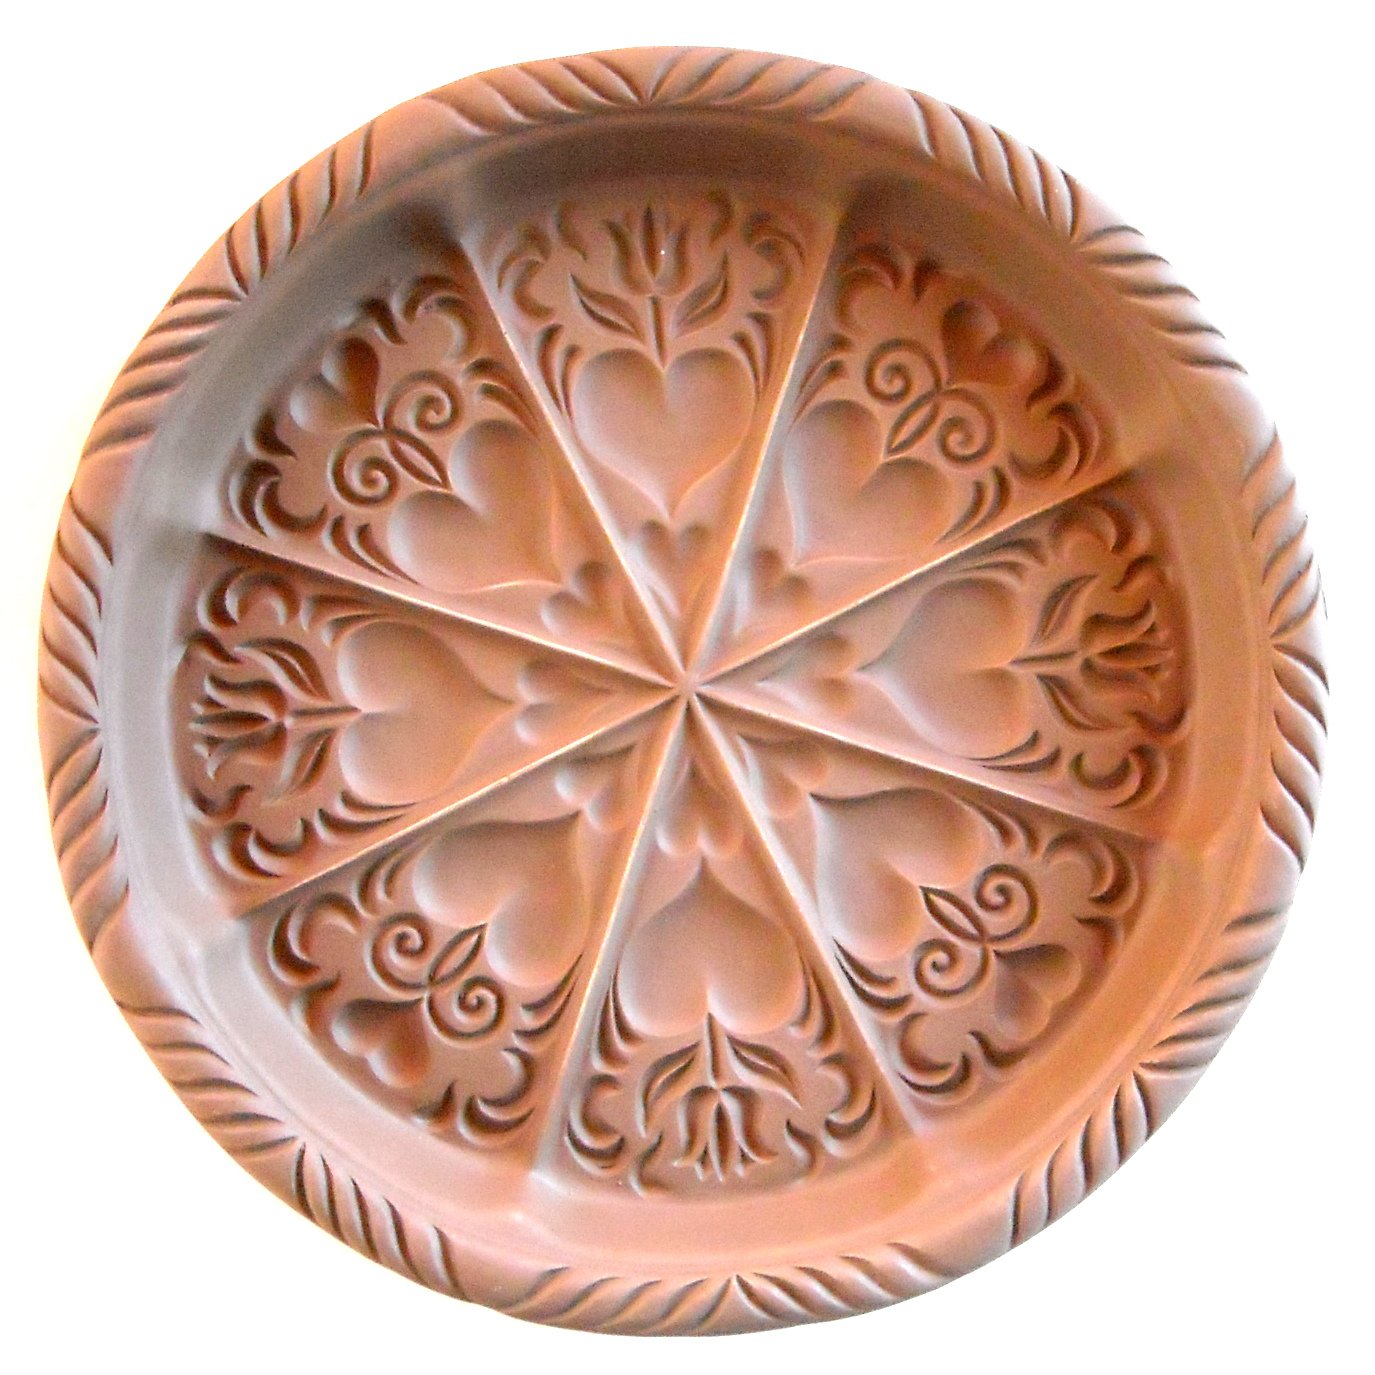 Hartstone Pottery USA Unglazed Shortbread Mold - Heart Design